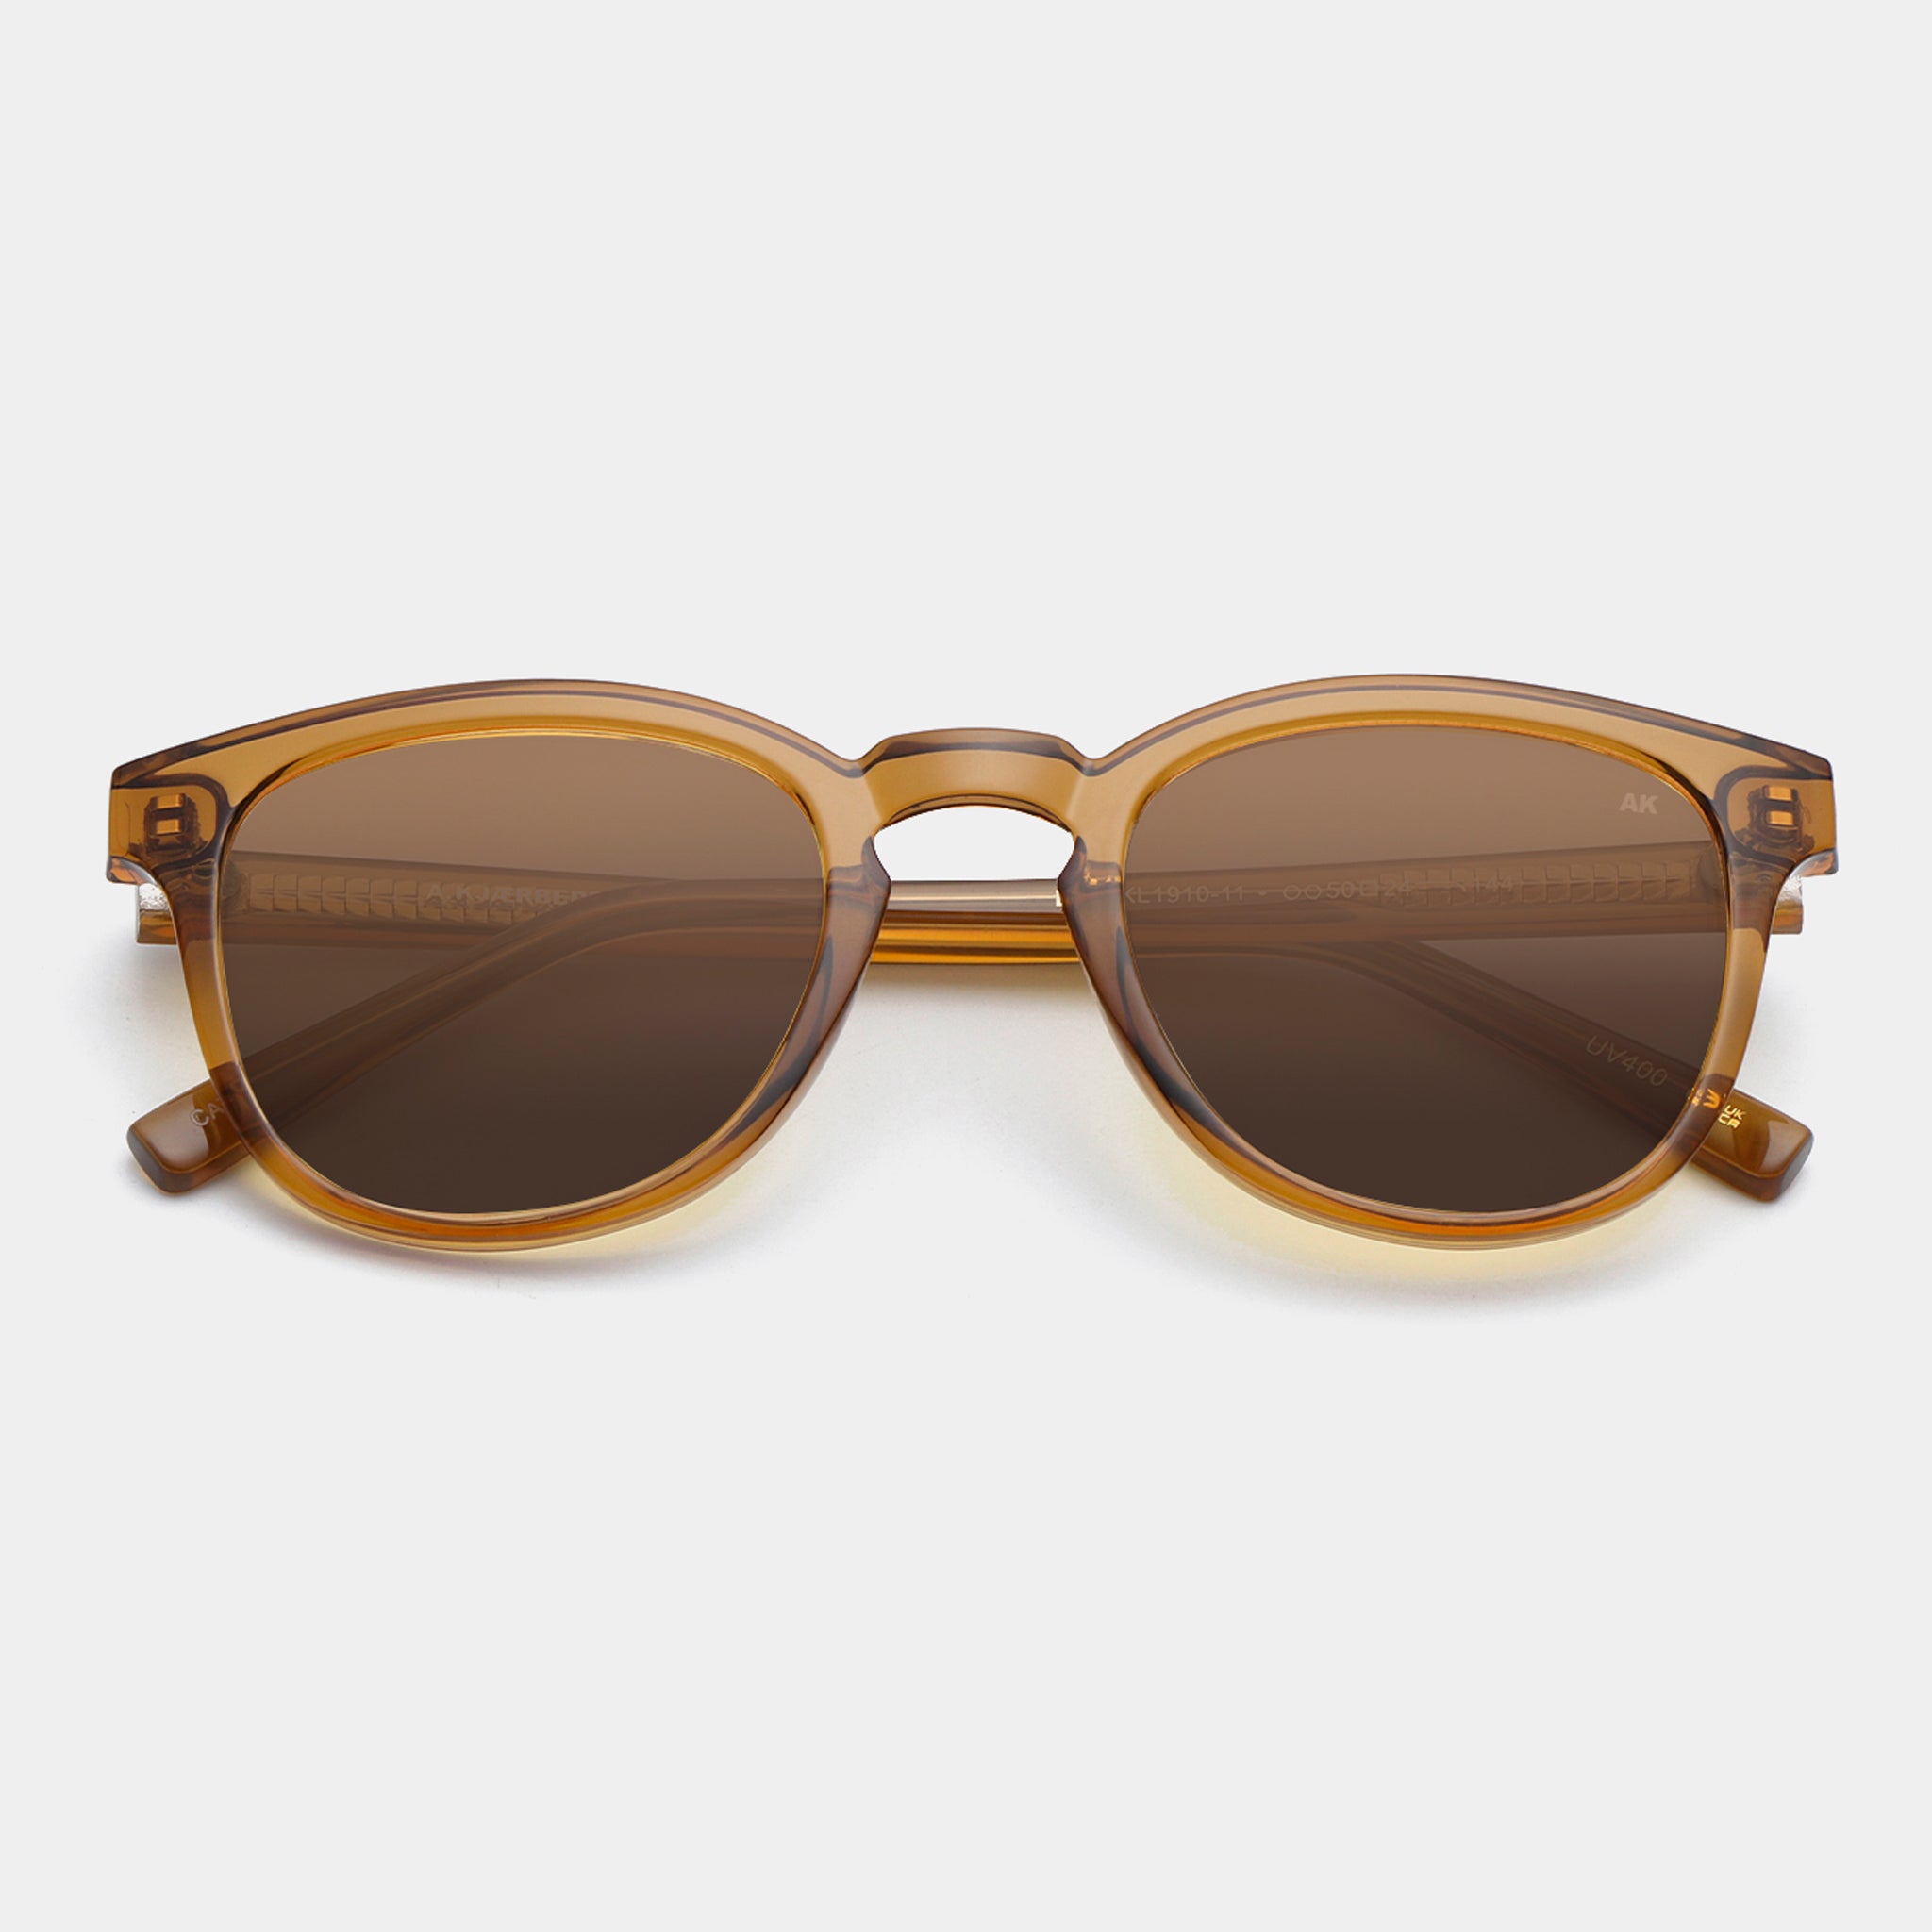 A.Kjaerbede - Sunglasses Bate - Smoke Transparent